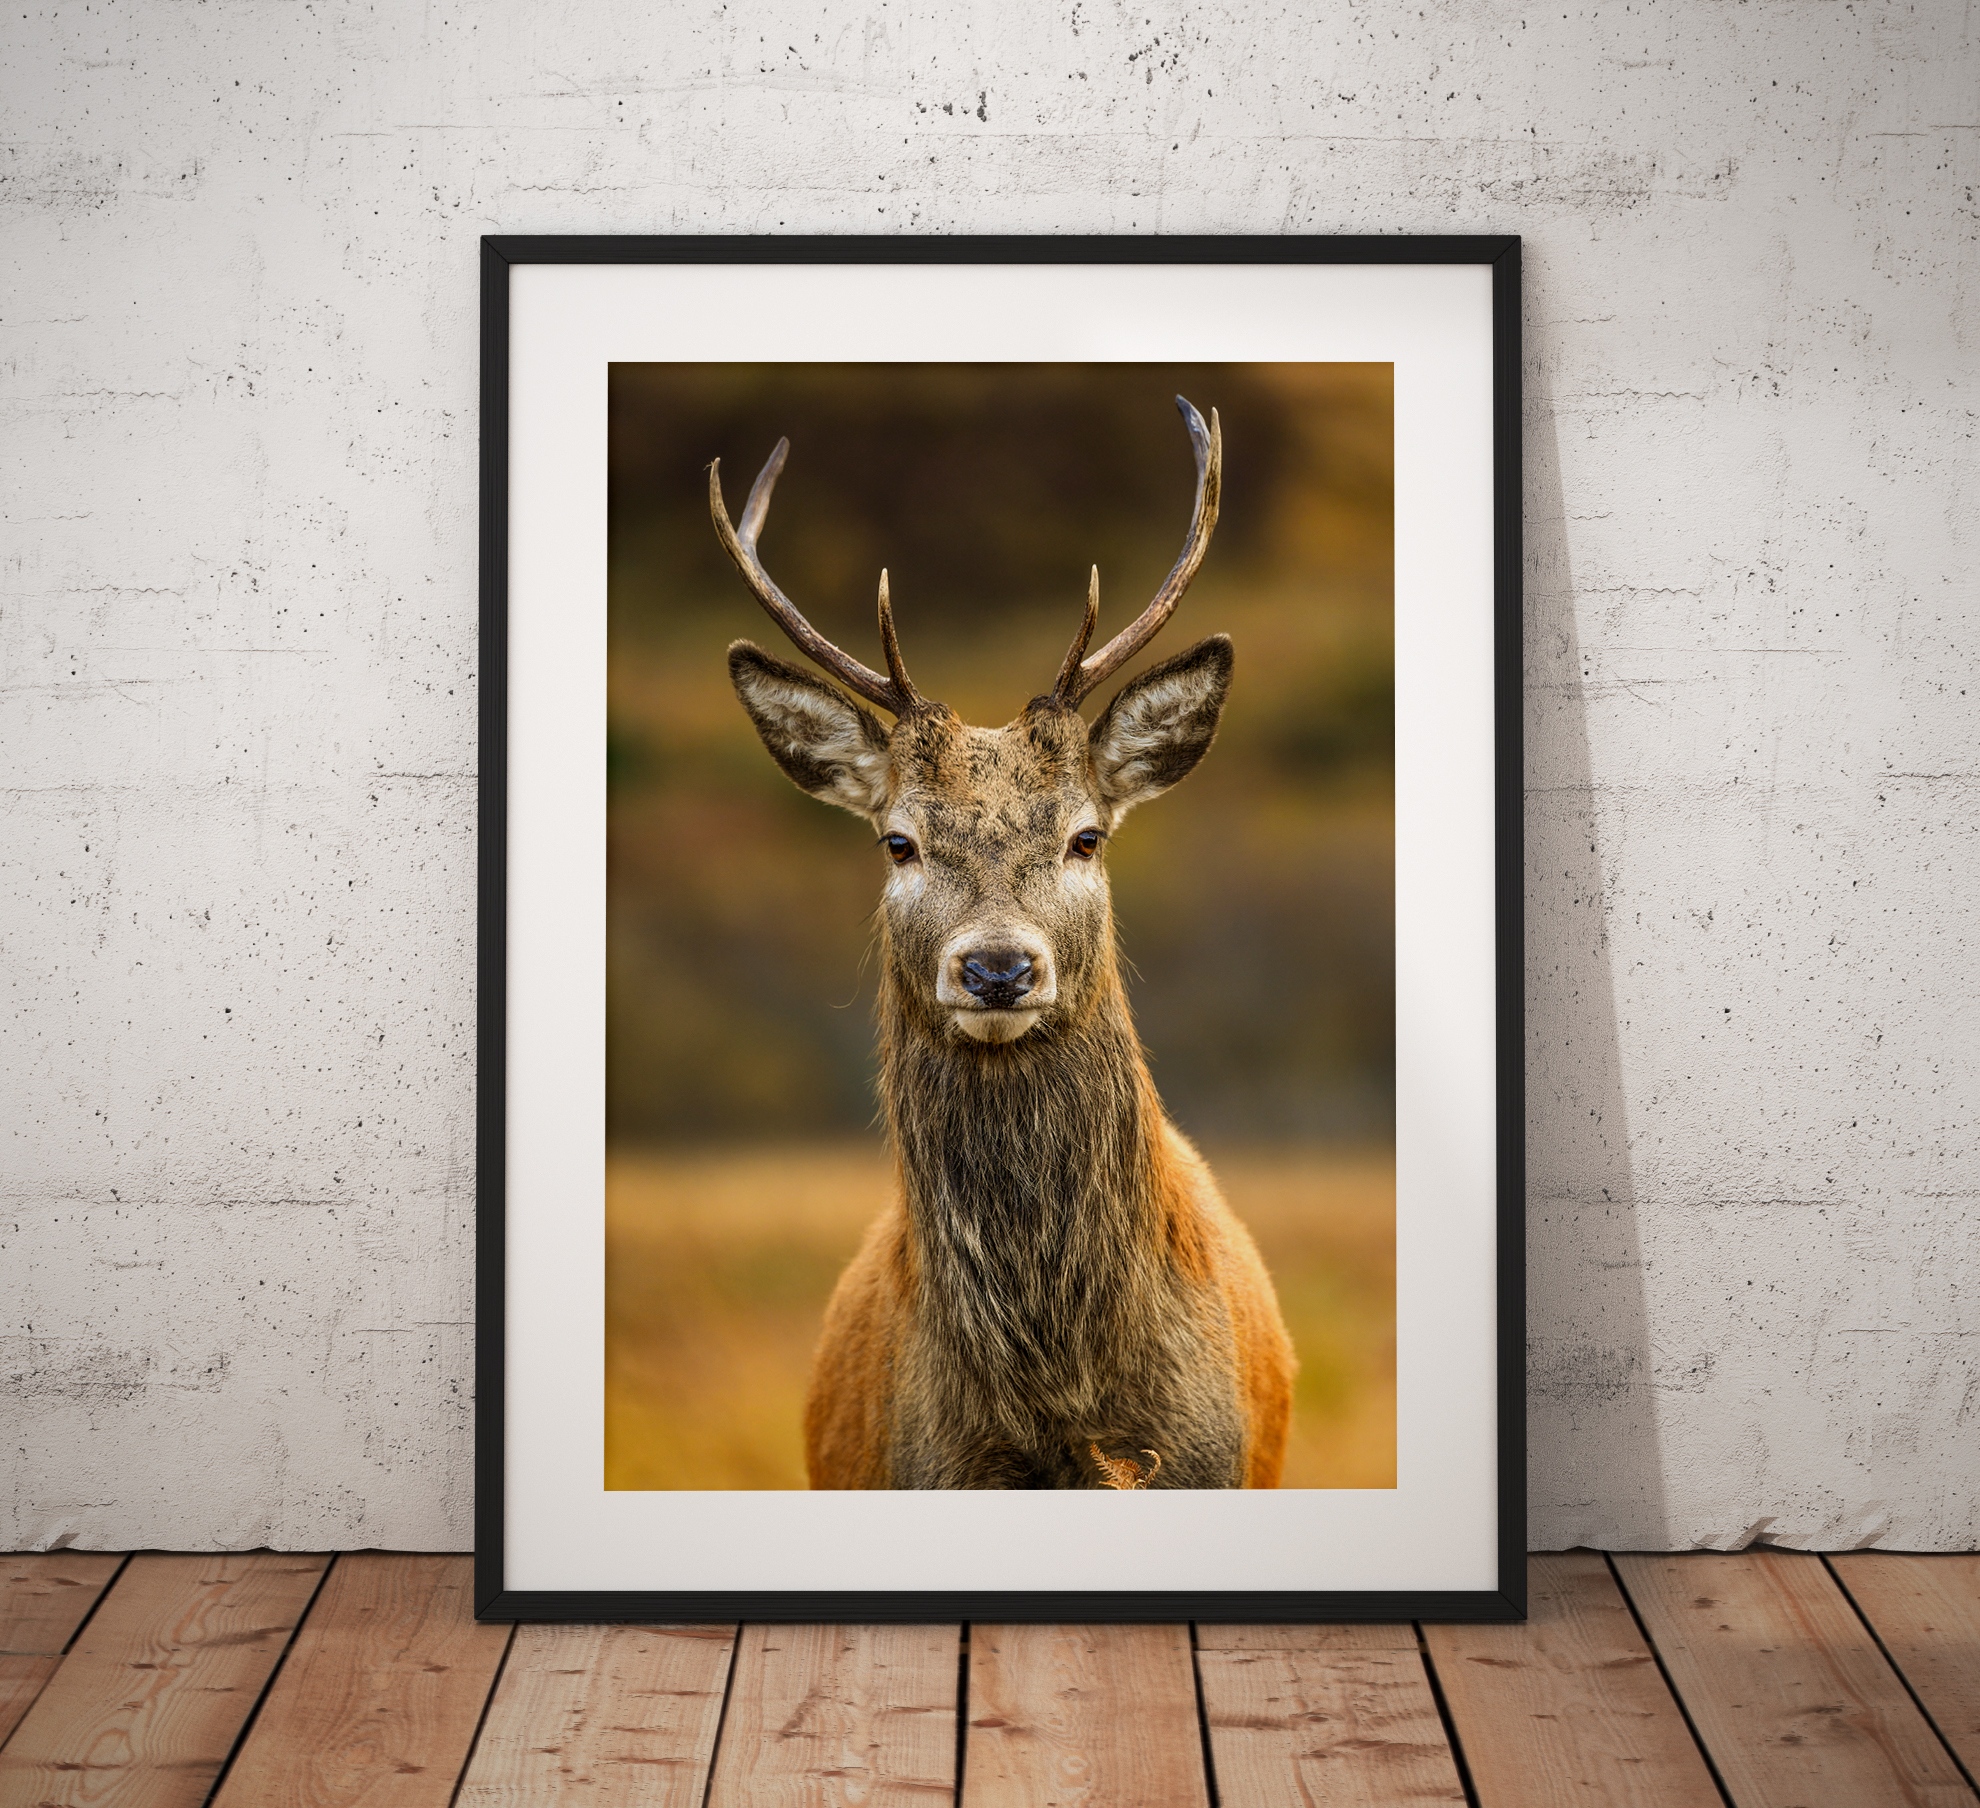 Northern Wild Landscape Photography - Stag Deer Scottish Highlands, Wildlife Scotland